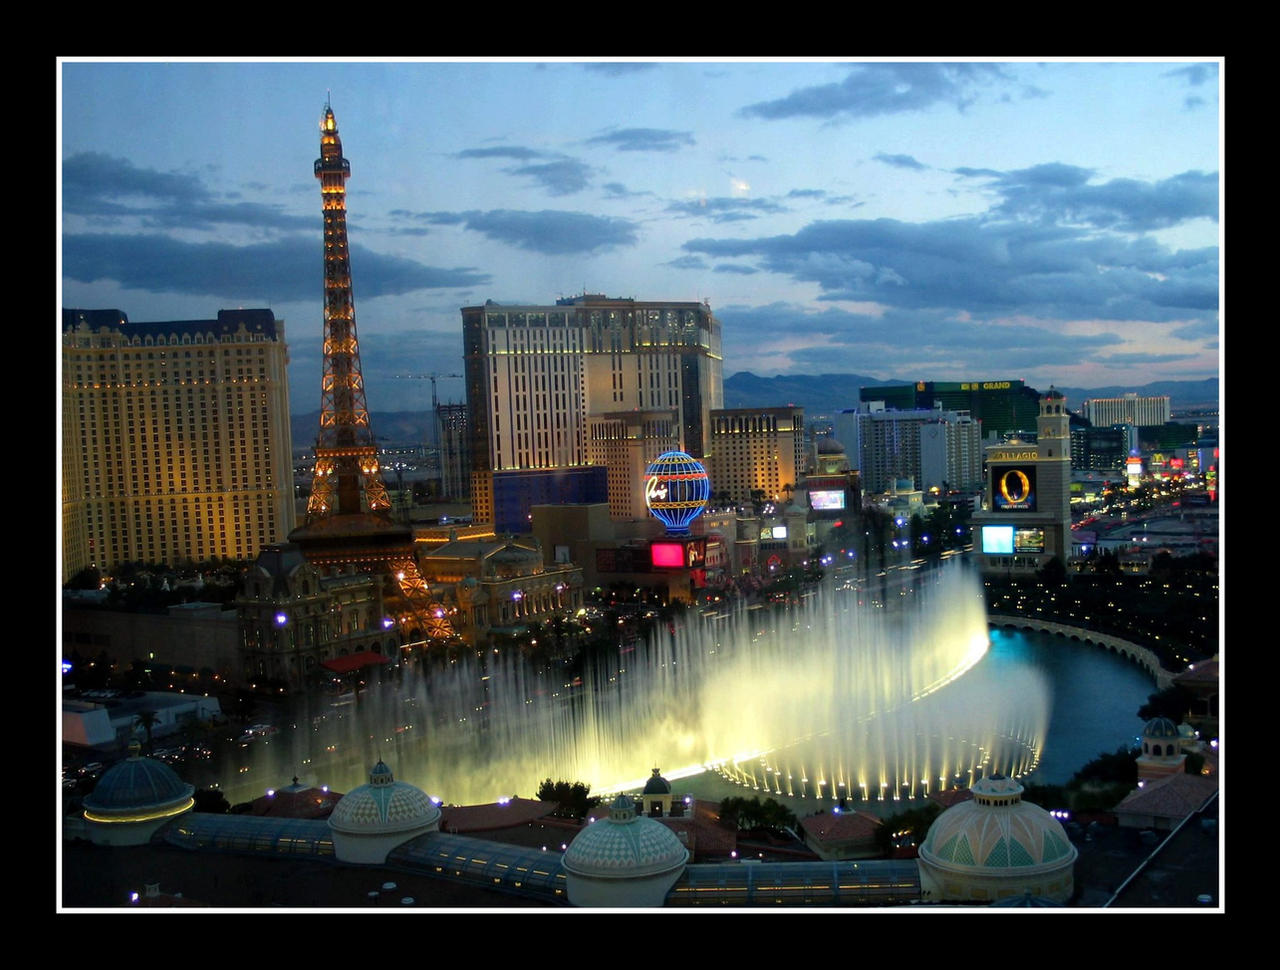 Las Vegas fountaines